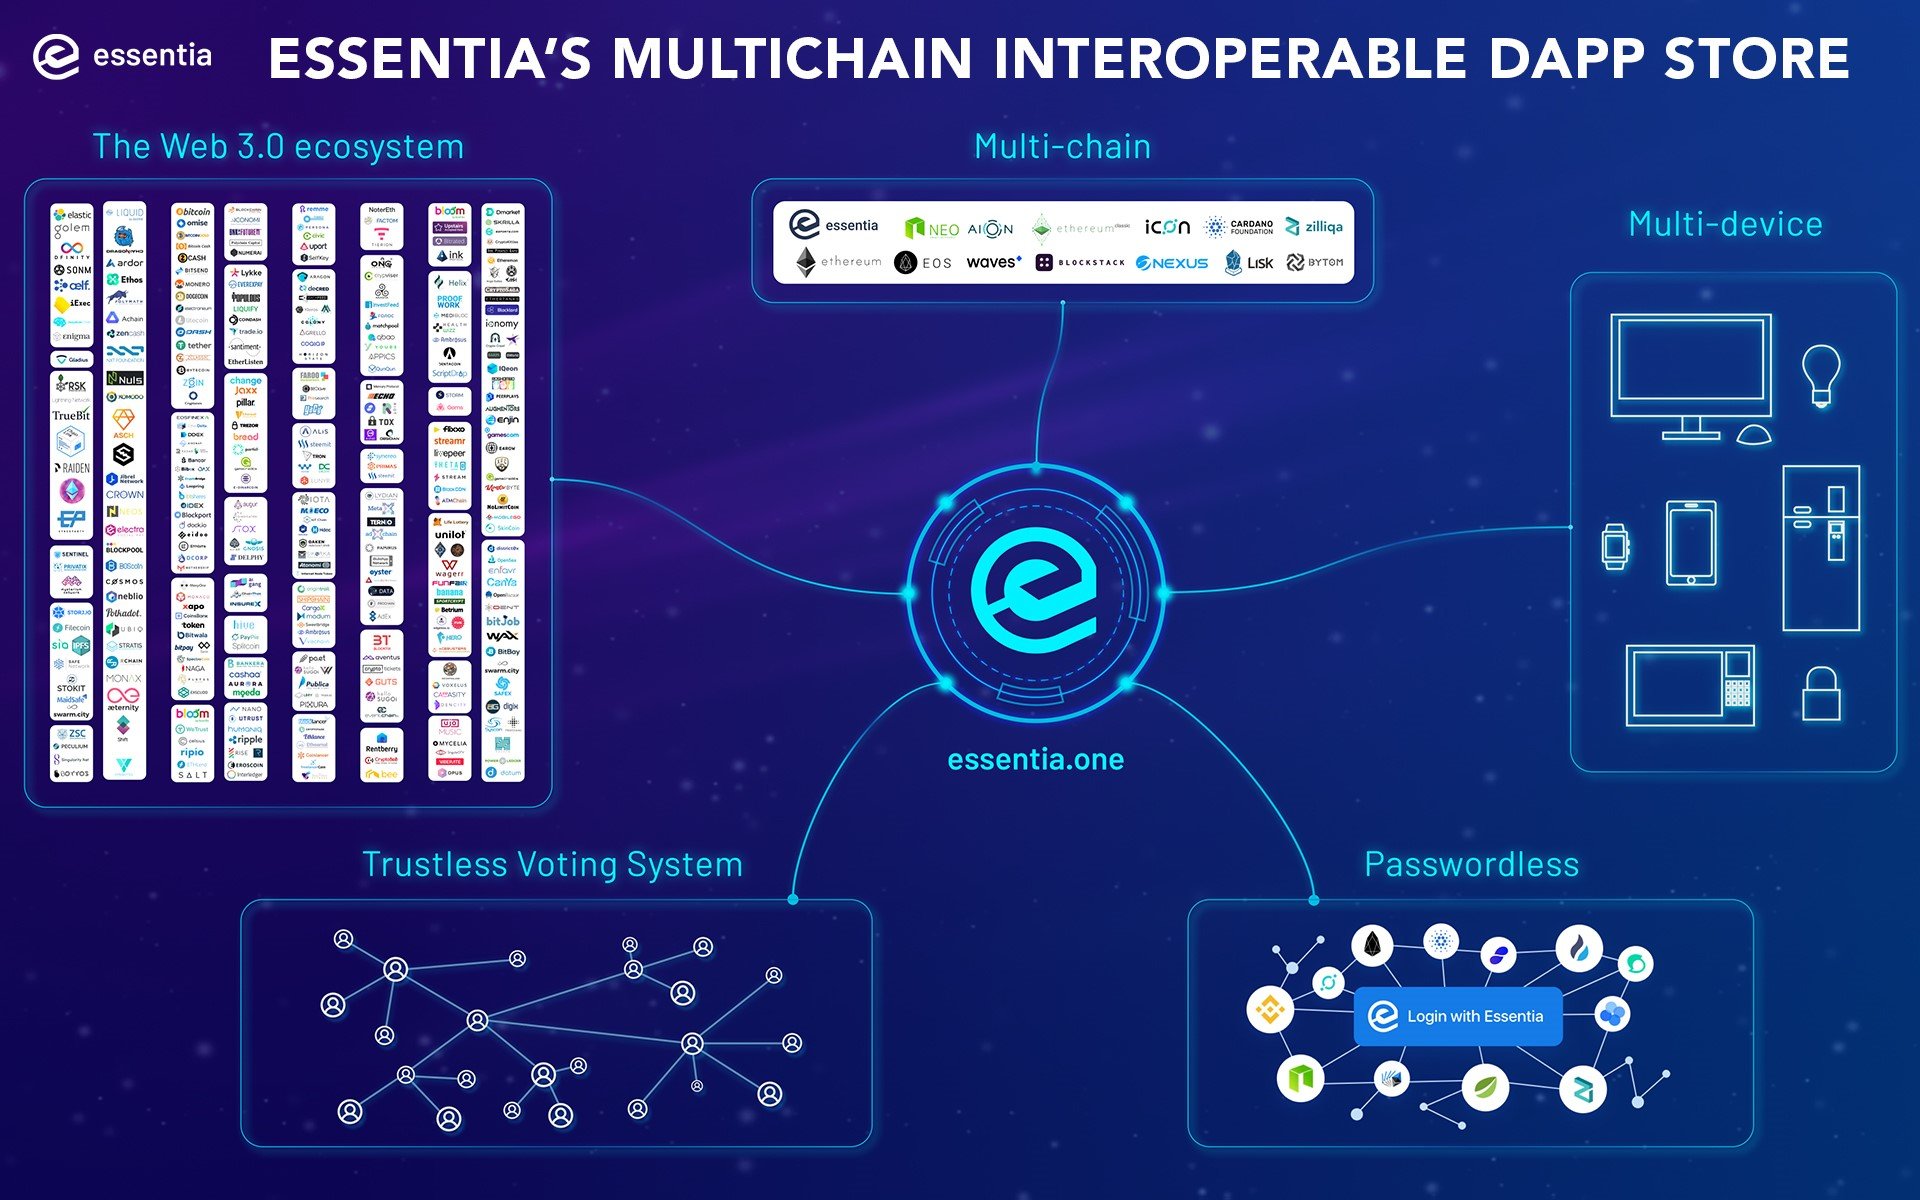 Essentia.One to Release World’s First Interoperable Multi-Chain Dapp